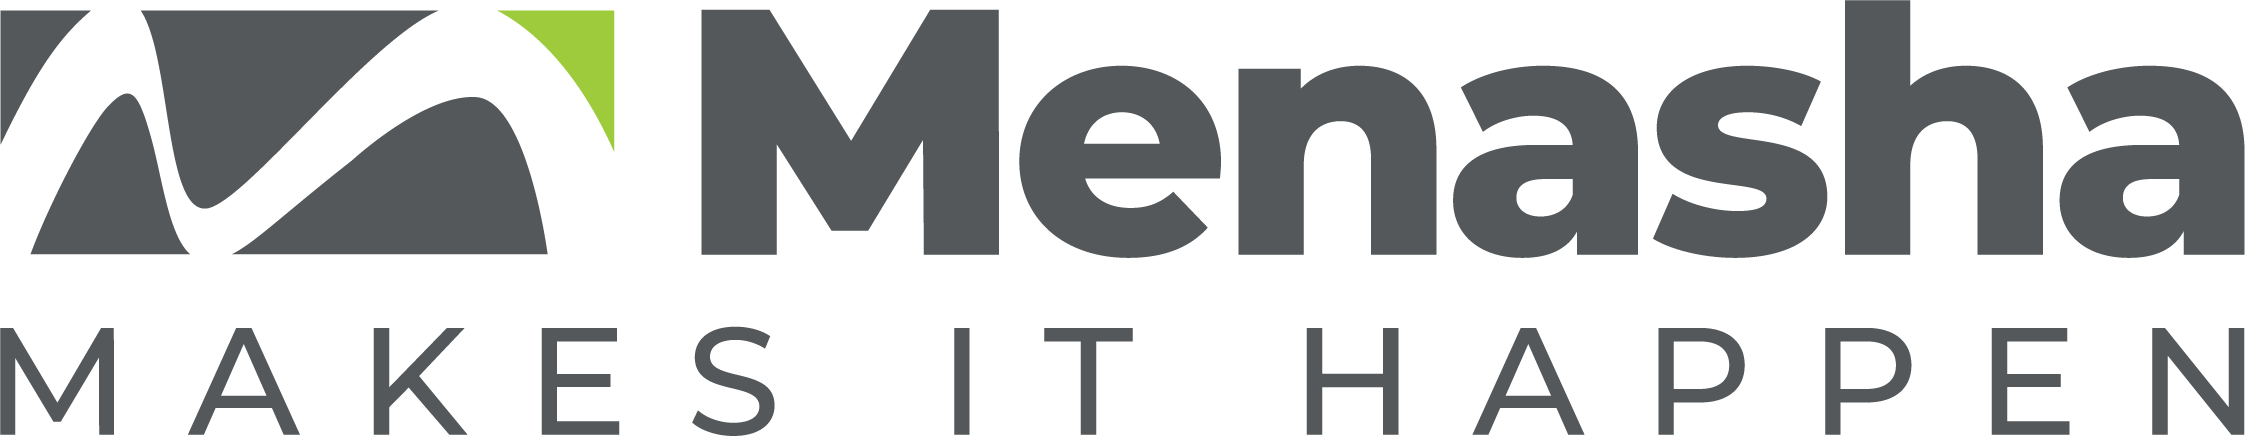 Menasha Logo_MMIH_2Color